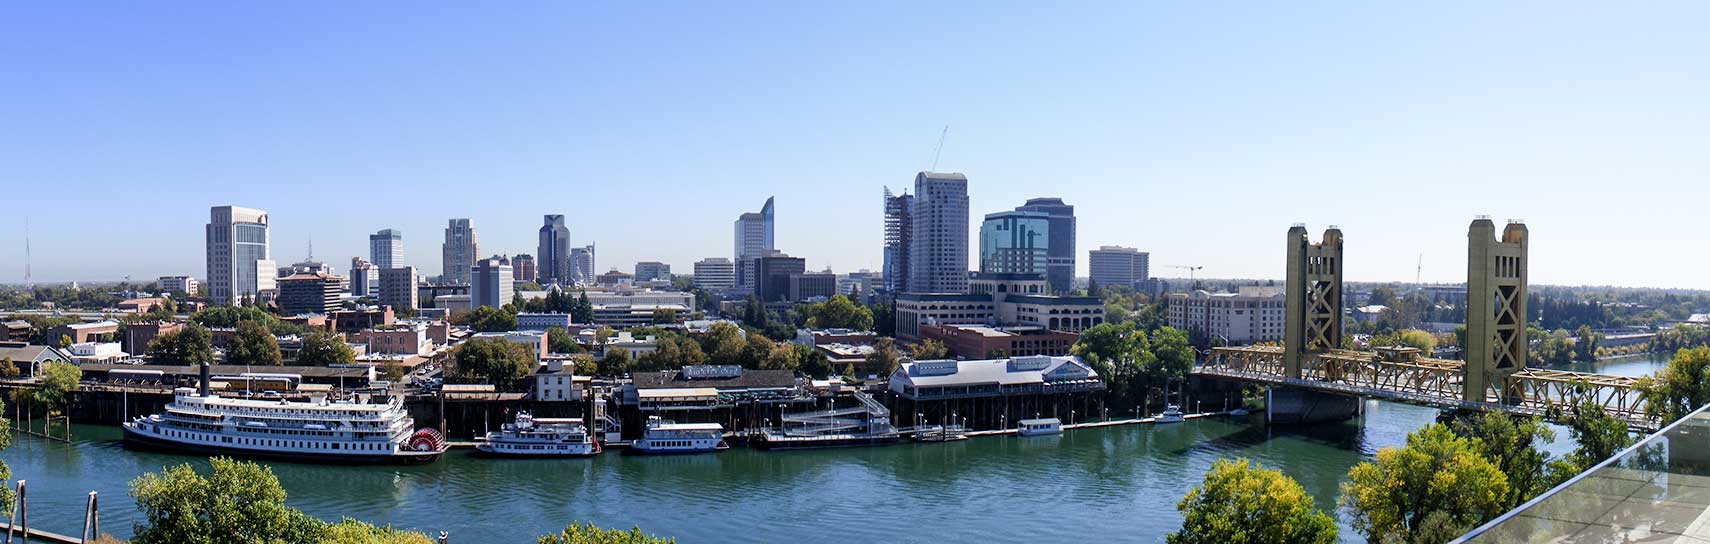 Photo of the Sacramento skyline